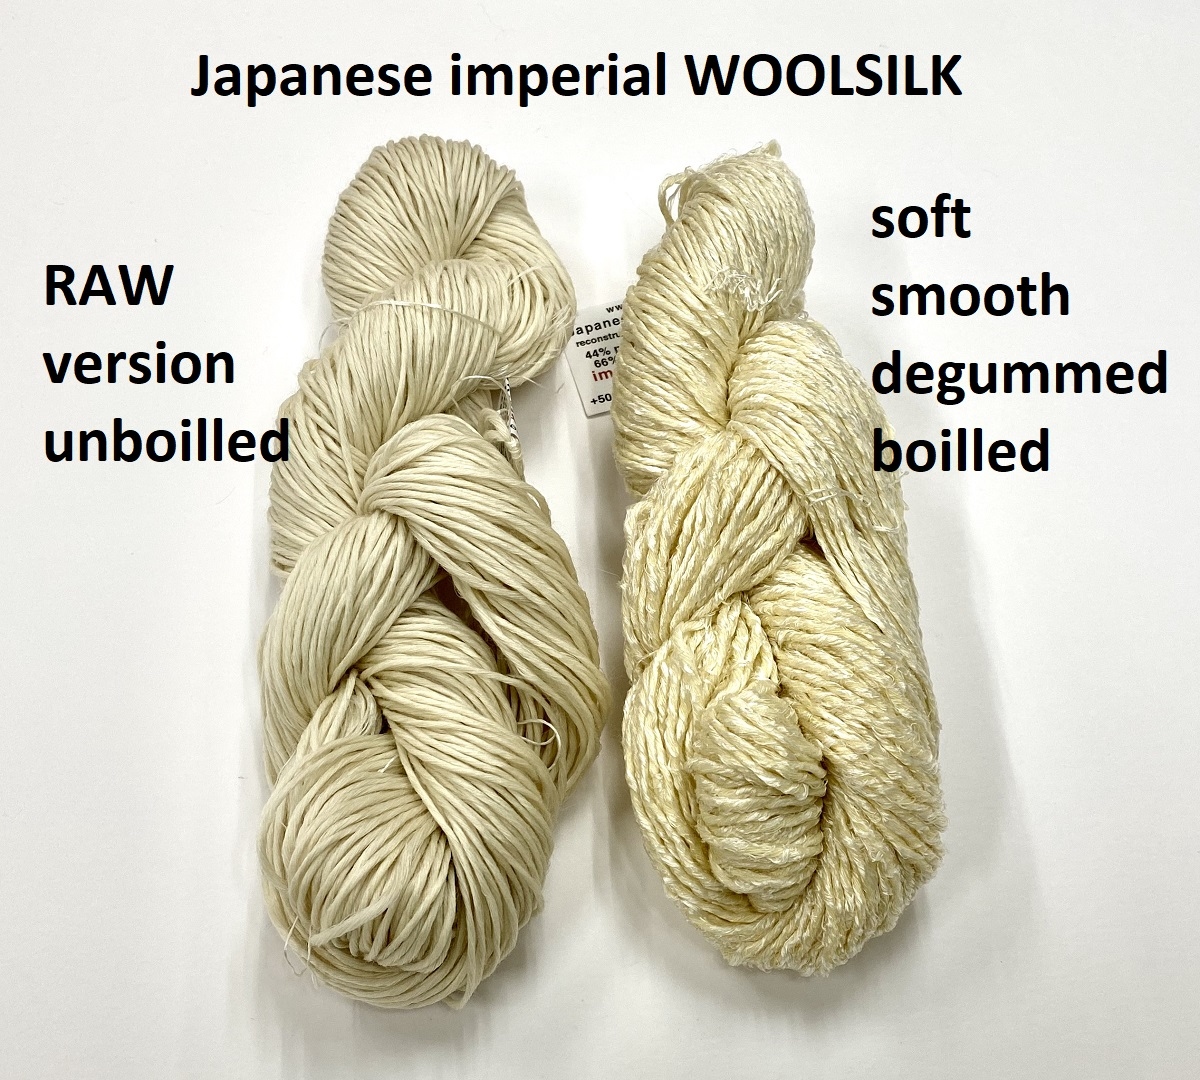 Japanese imperial WOOLSILK  boilled & degummed SOFT